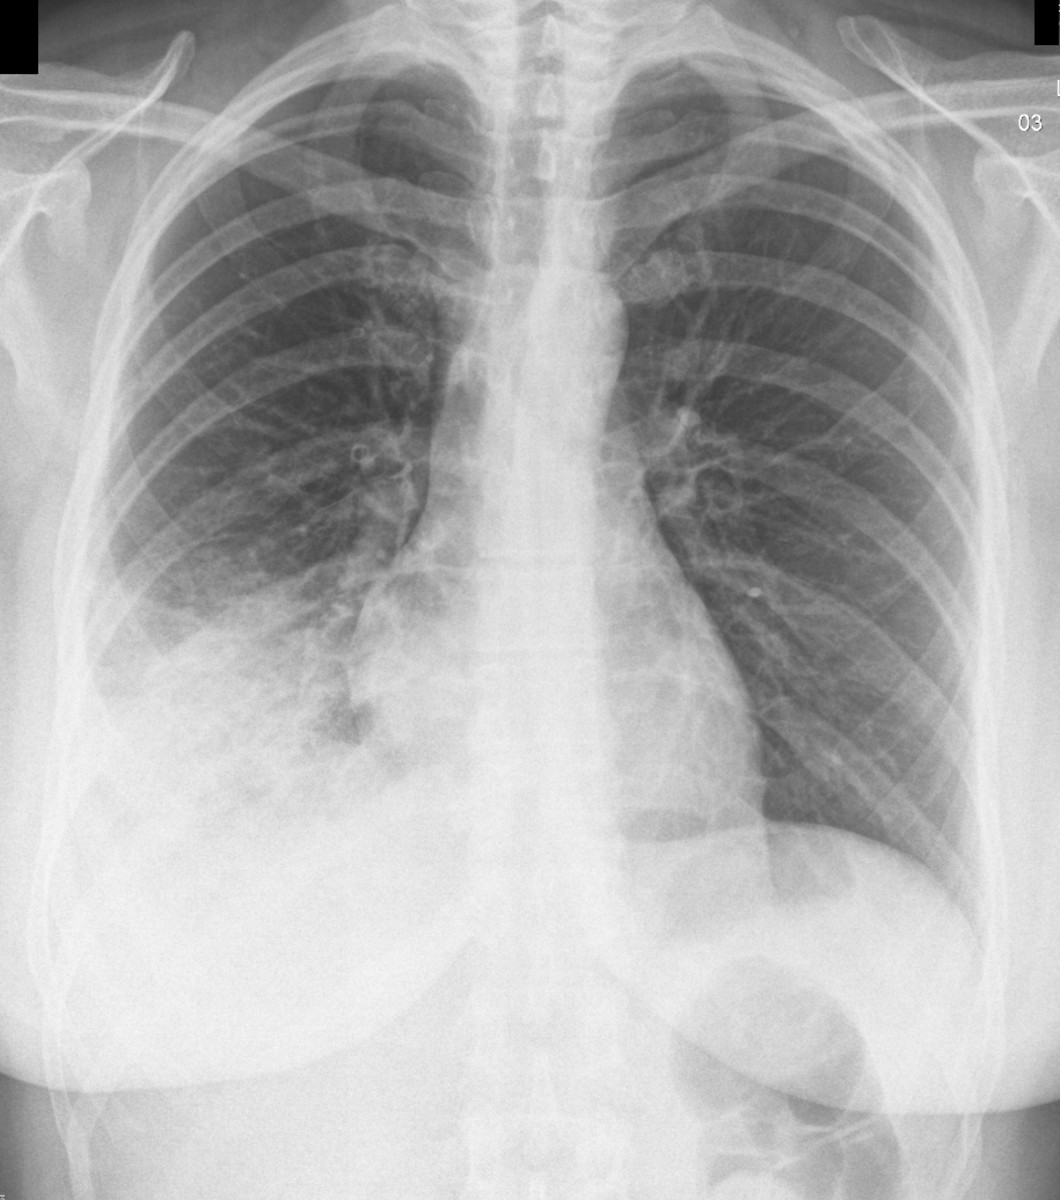 Pneumonia Manifestation Seen And Diagnosed Via X